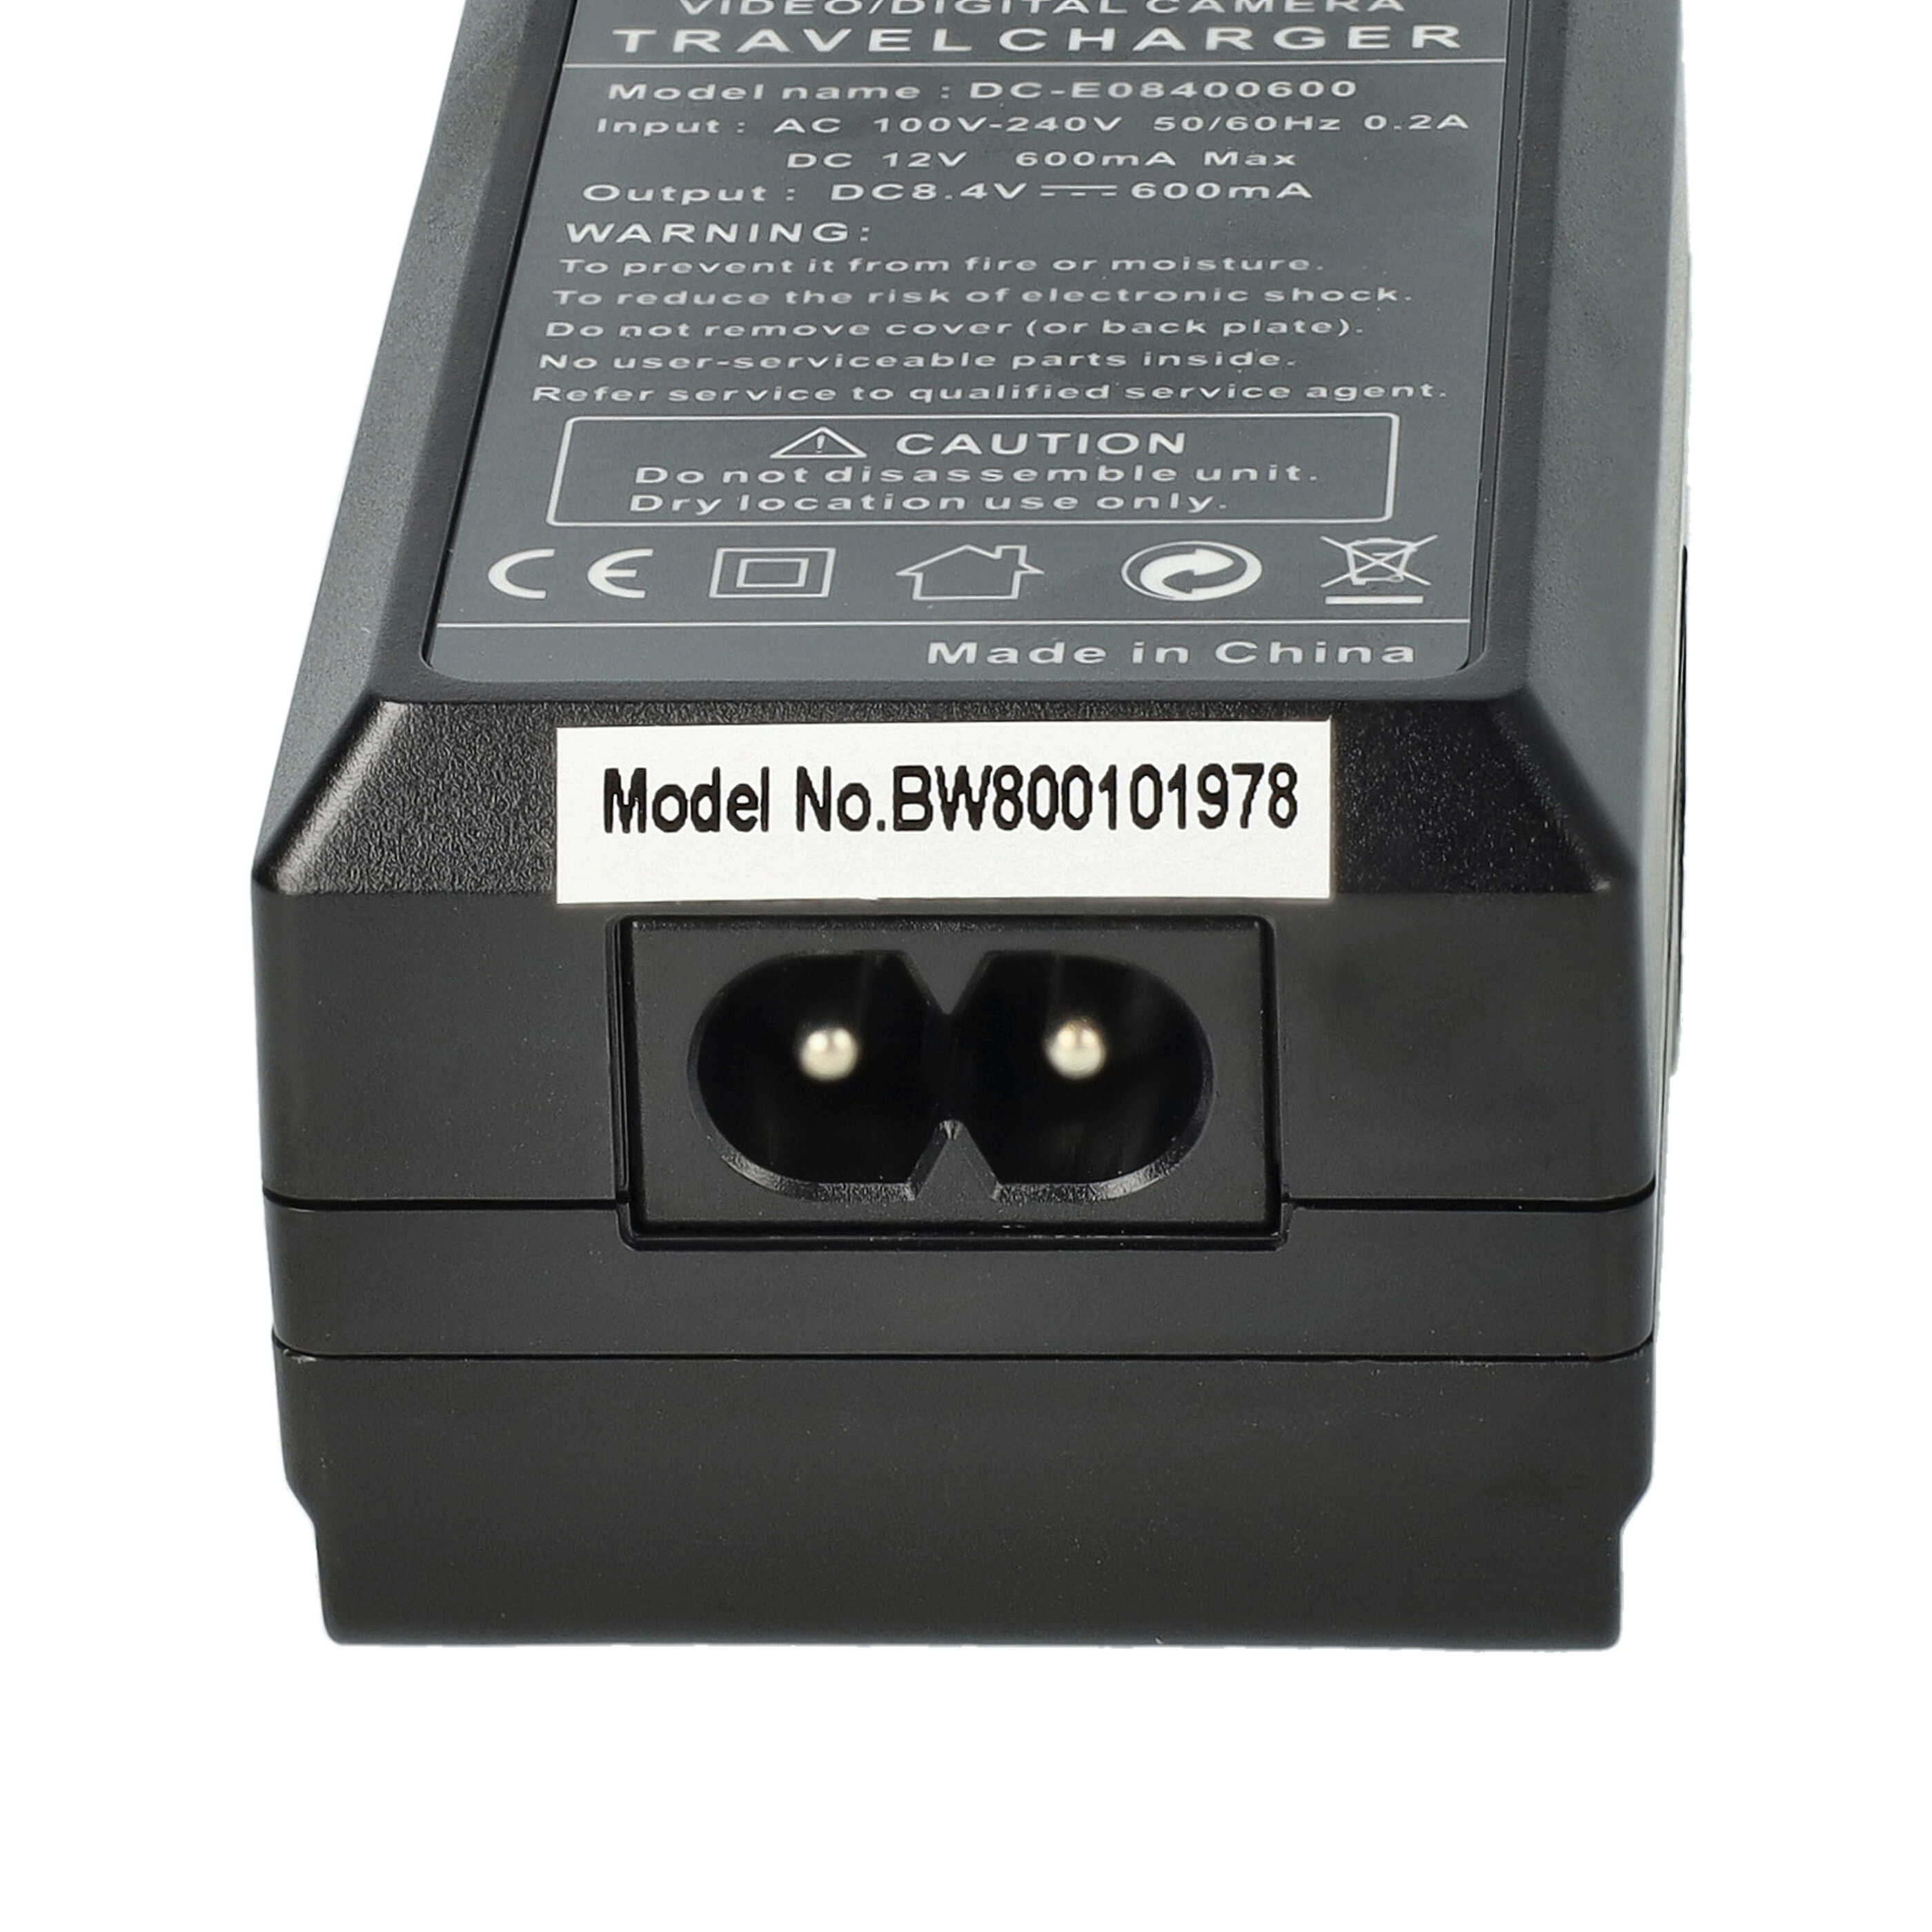 Ładowarka do aparatu Sony NP-FW50 i innych - ładowarka akumulatora 0,6 A, 8,4 V